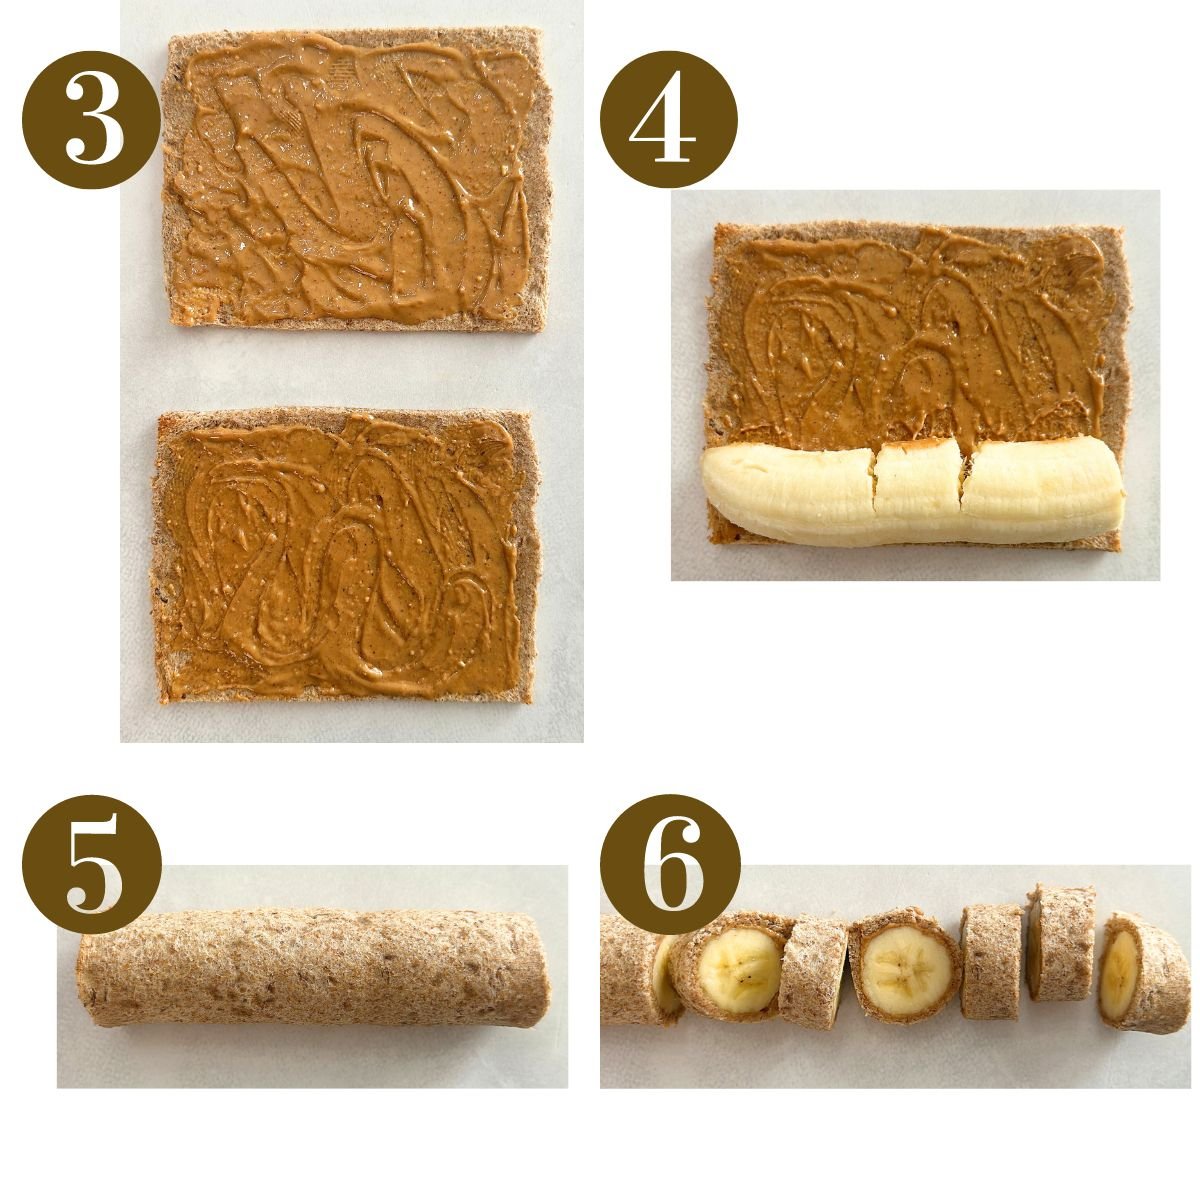 Steps to make peanut butter banana sushi.